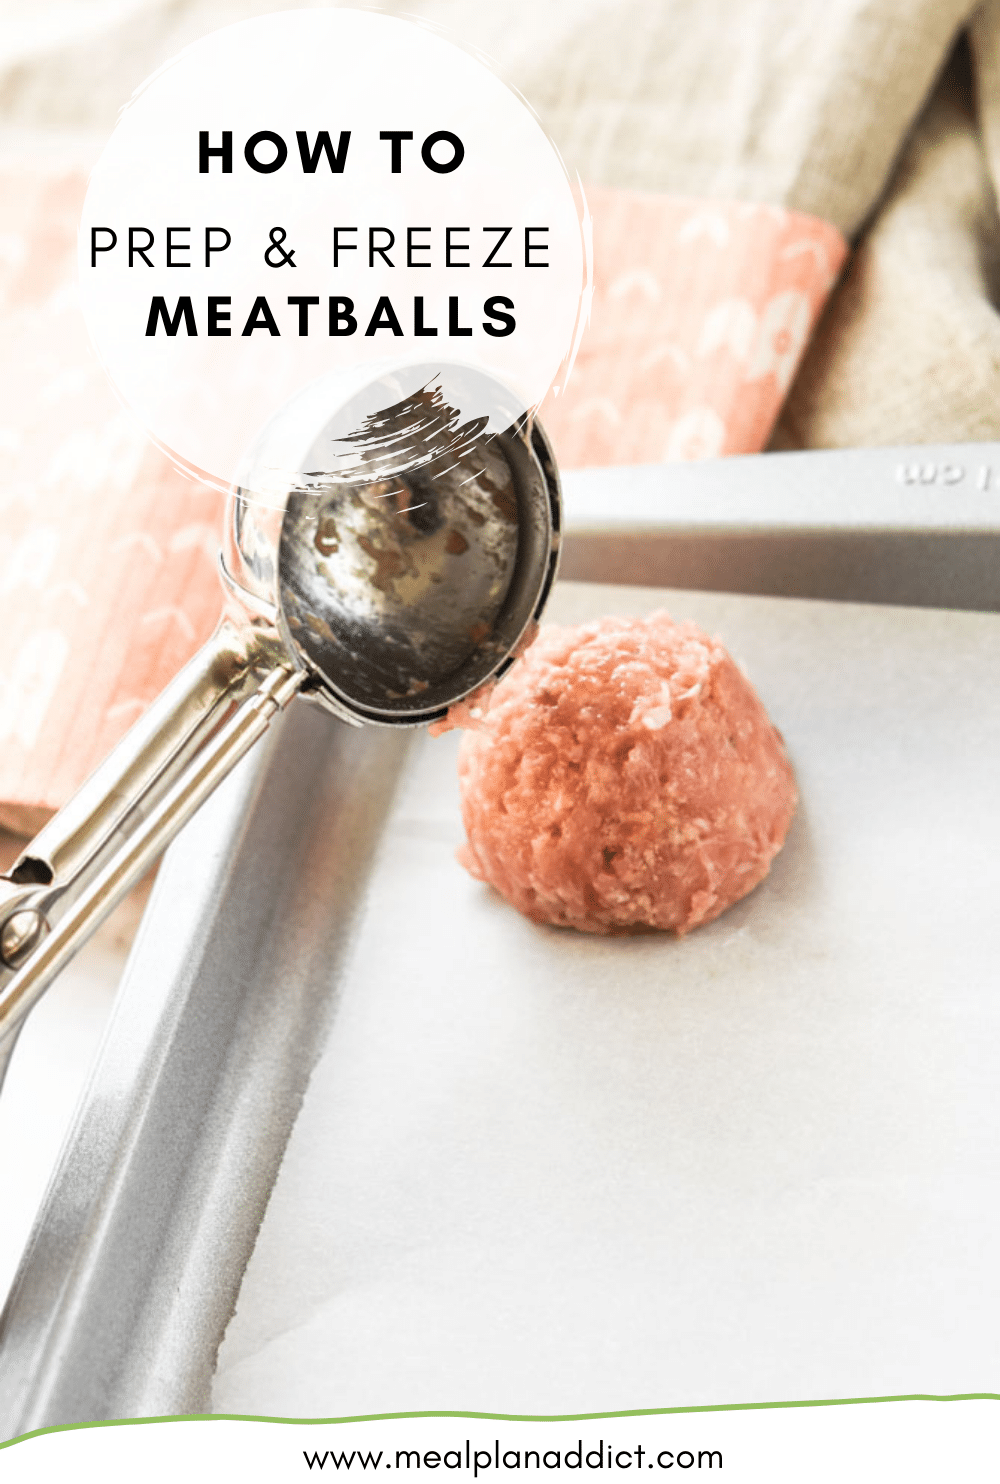 How to Prep & Freeze Meatballs